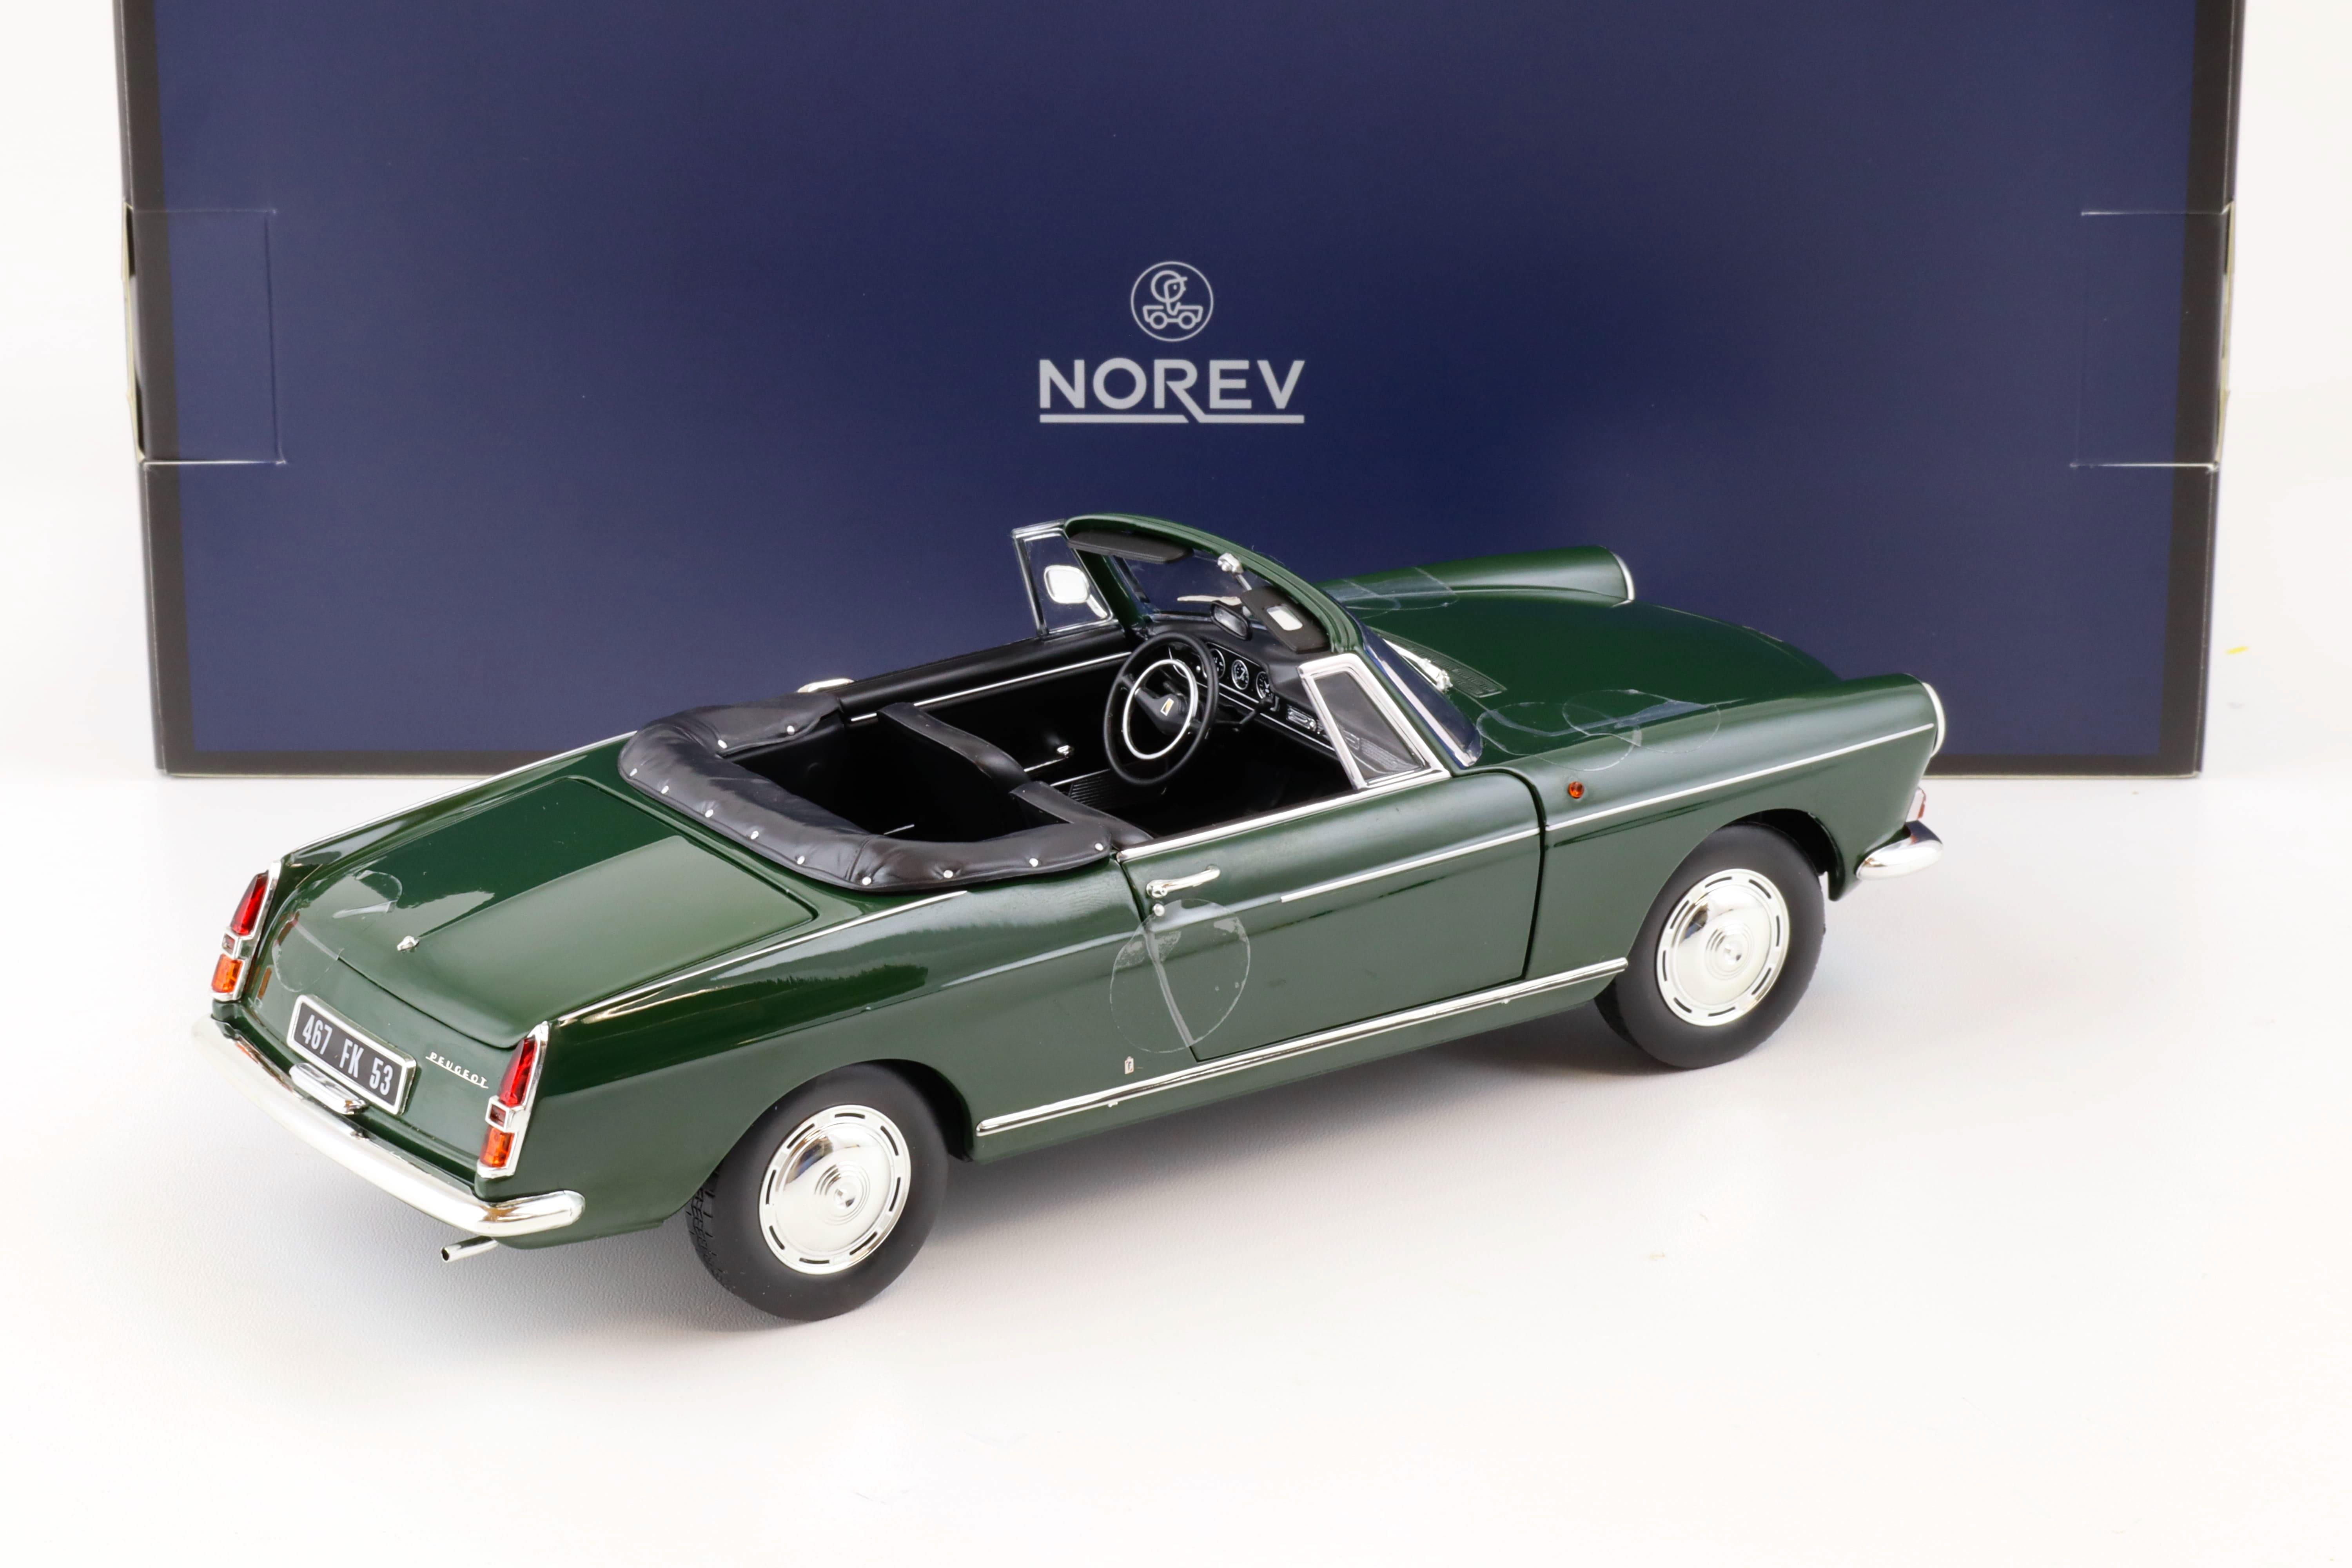 1:18 Norev Peugeot 404 Cabriolet 1967 Antique green - Limited 200 pcs.